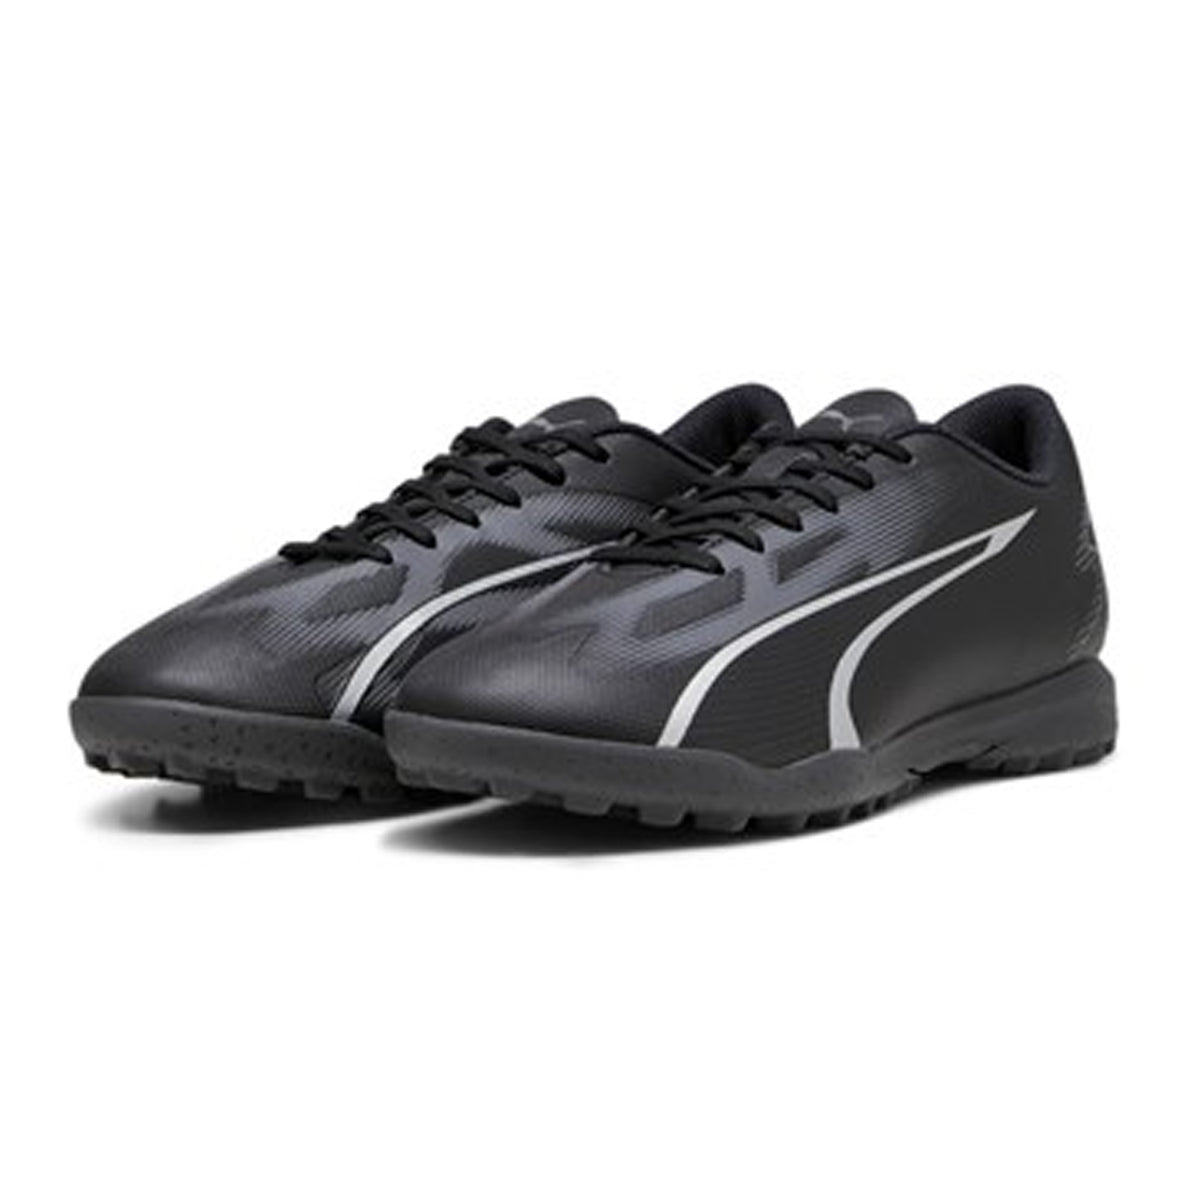 Puma Ultra Play Junior Astro Football Boots: Black/Asphalt